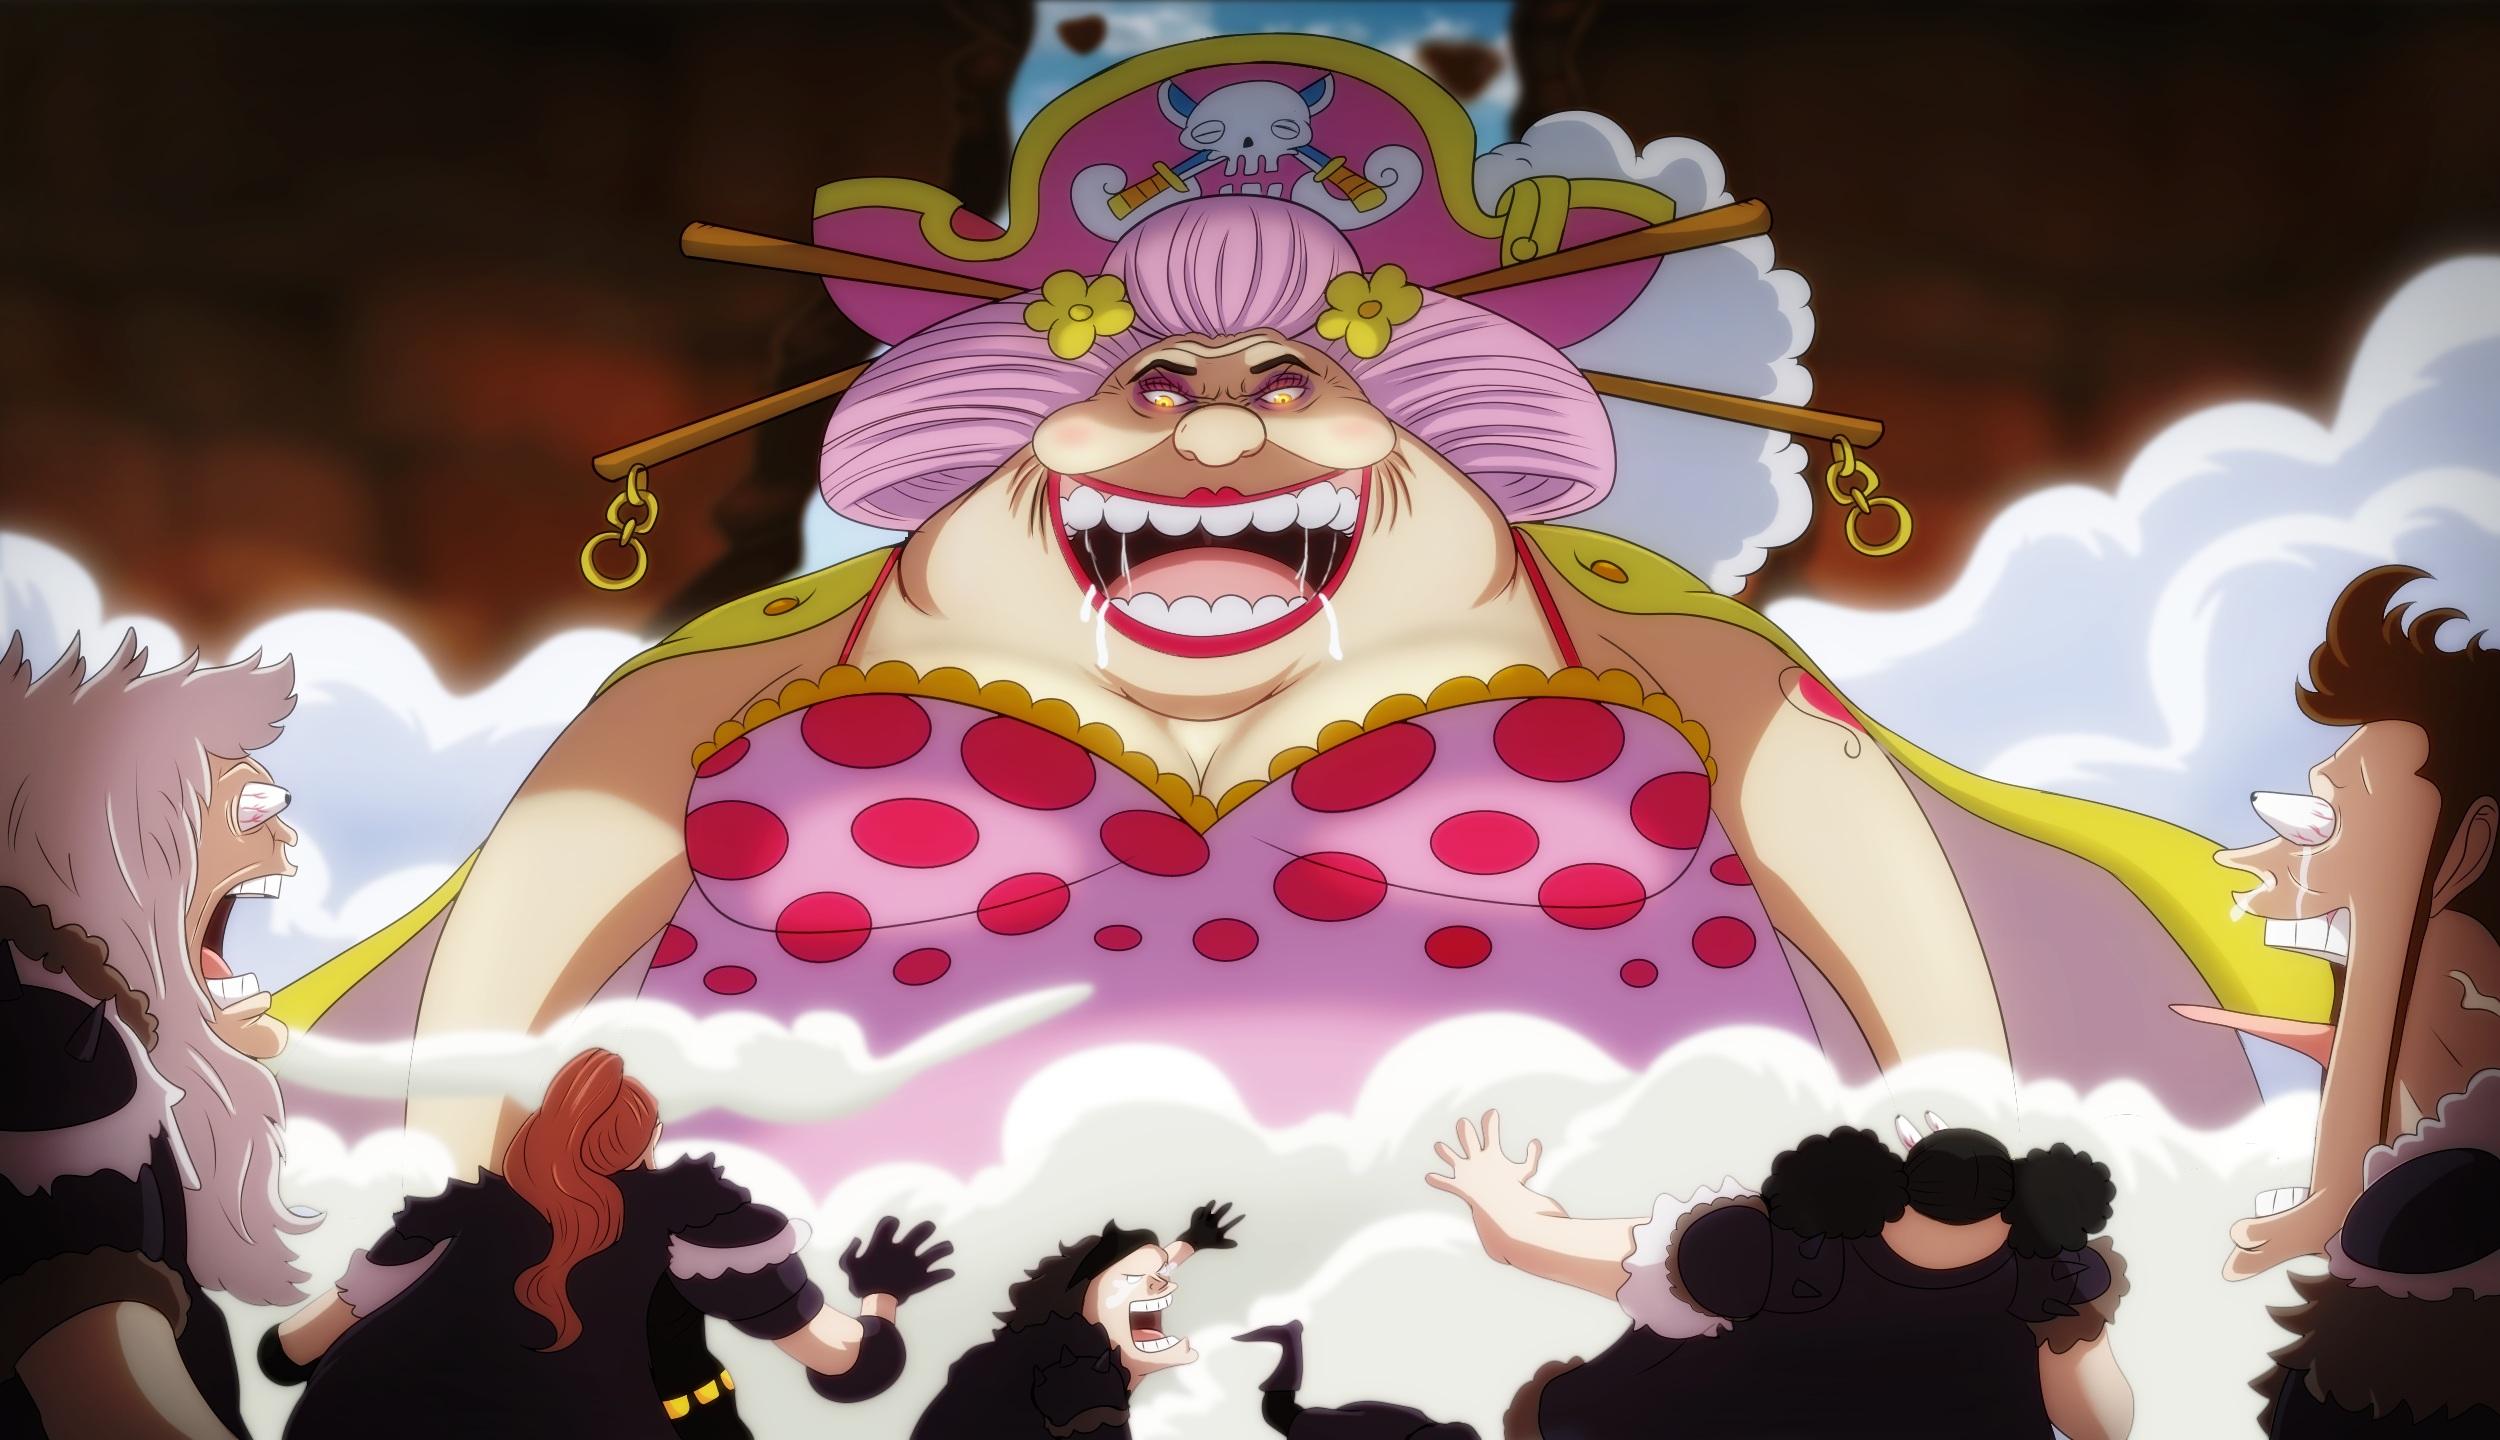 Big Mom Wallpaper 4k Download, One Piece wallpaper, Anime